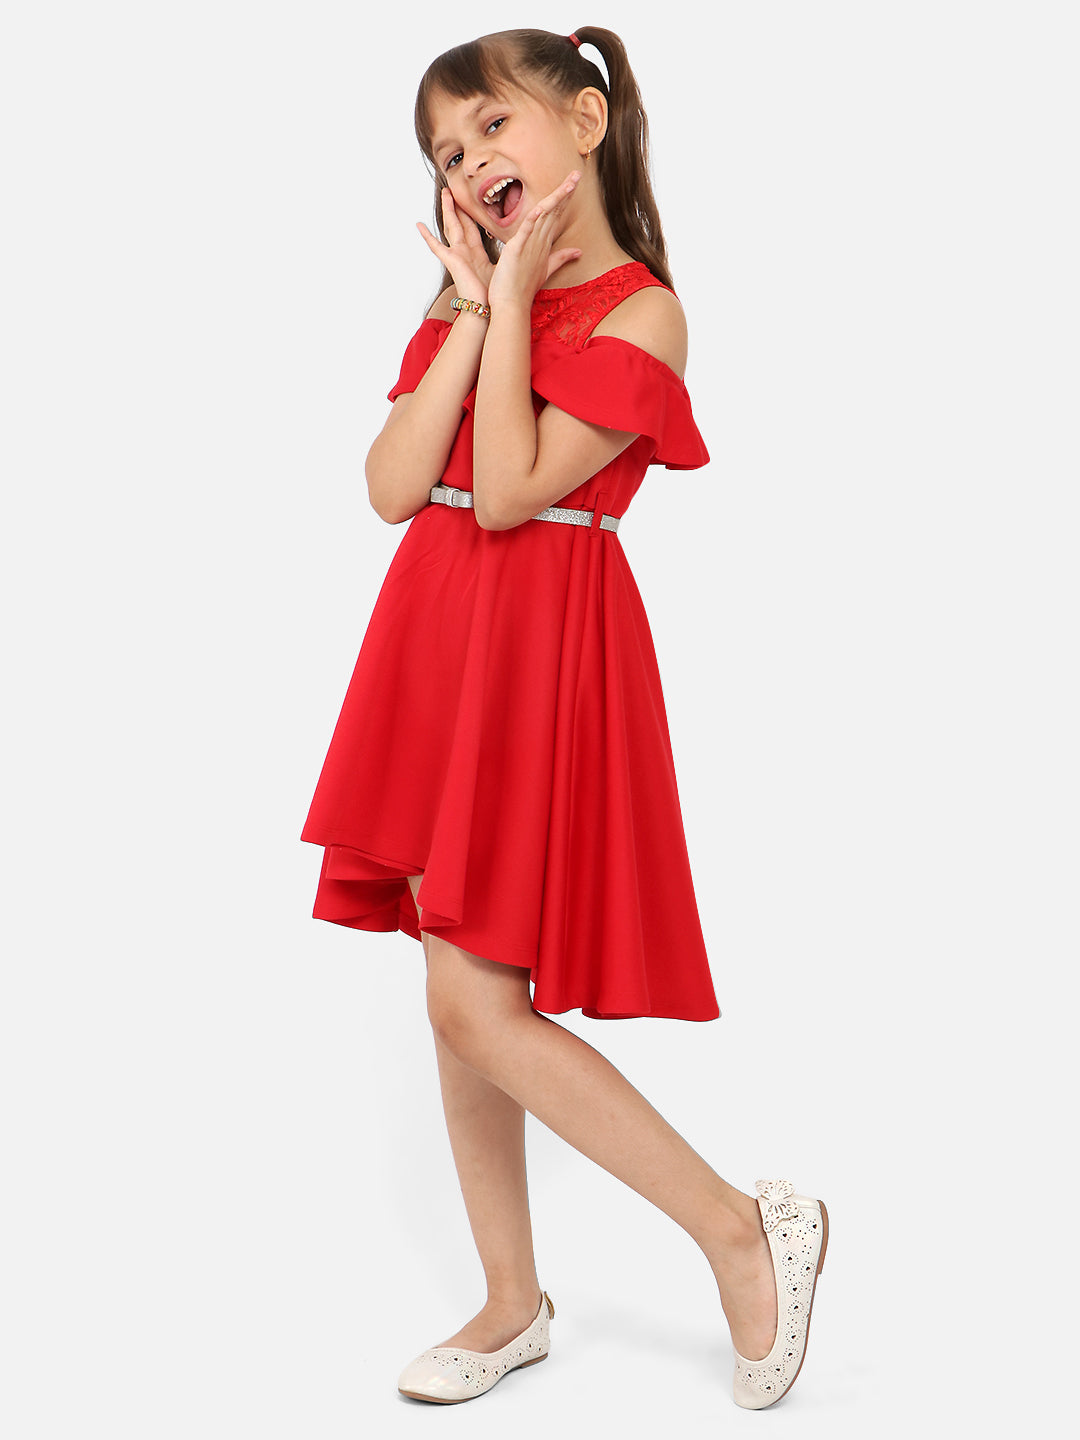 Nautinati Girls Red Solid Short Sleeve Polyester Dress